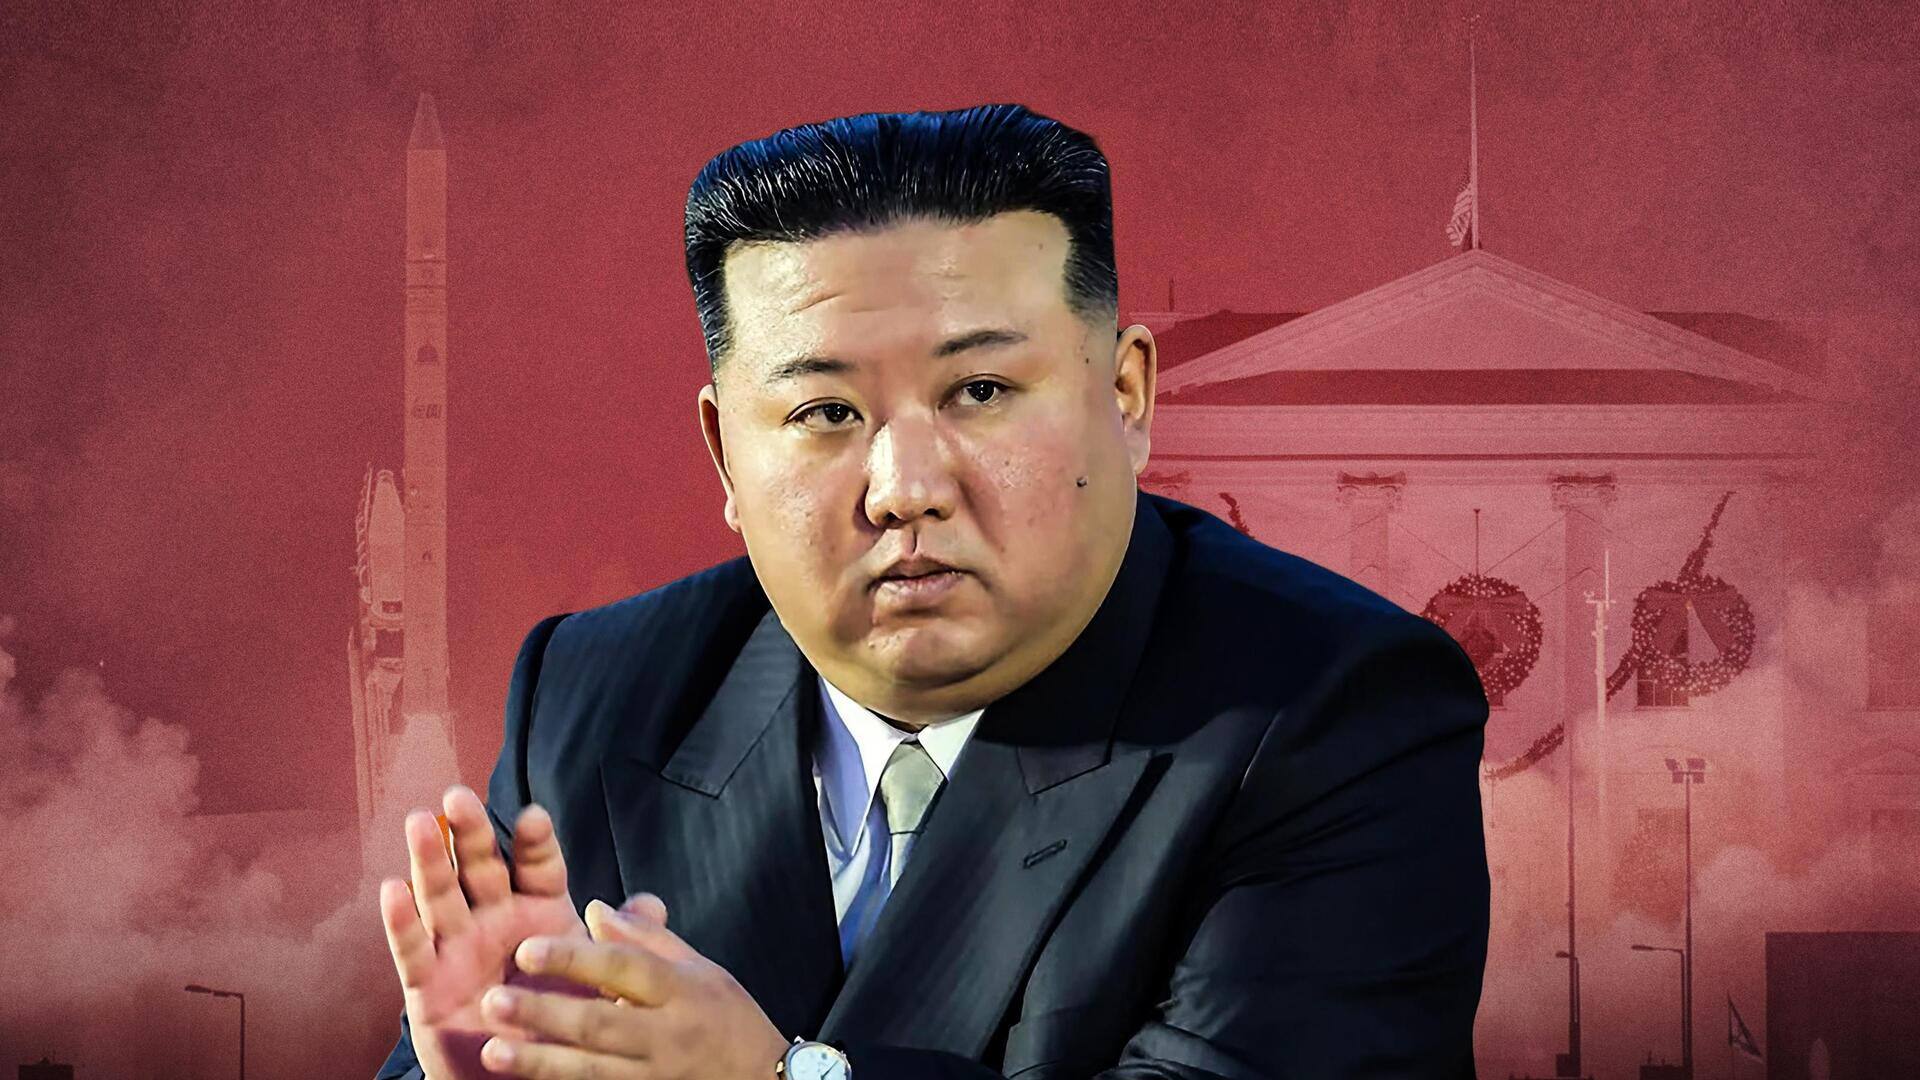 North Korea : కిమ్ ఉపగ్రహం.. వైట్ హౌస్, పెంటగాన్ ఫోటోలు తీసిందట.. ఉత్తర కొరియా సంచలన ప్రకటన